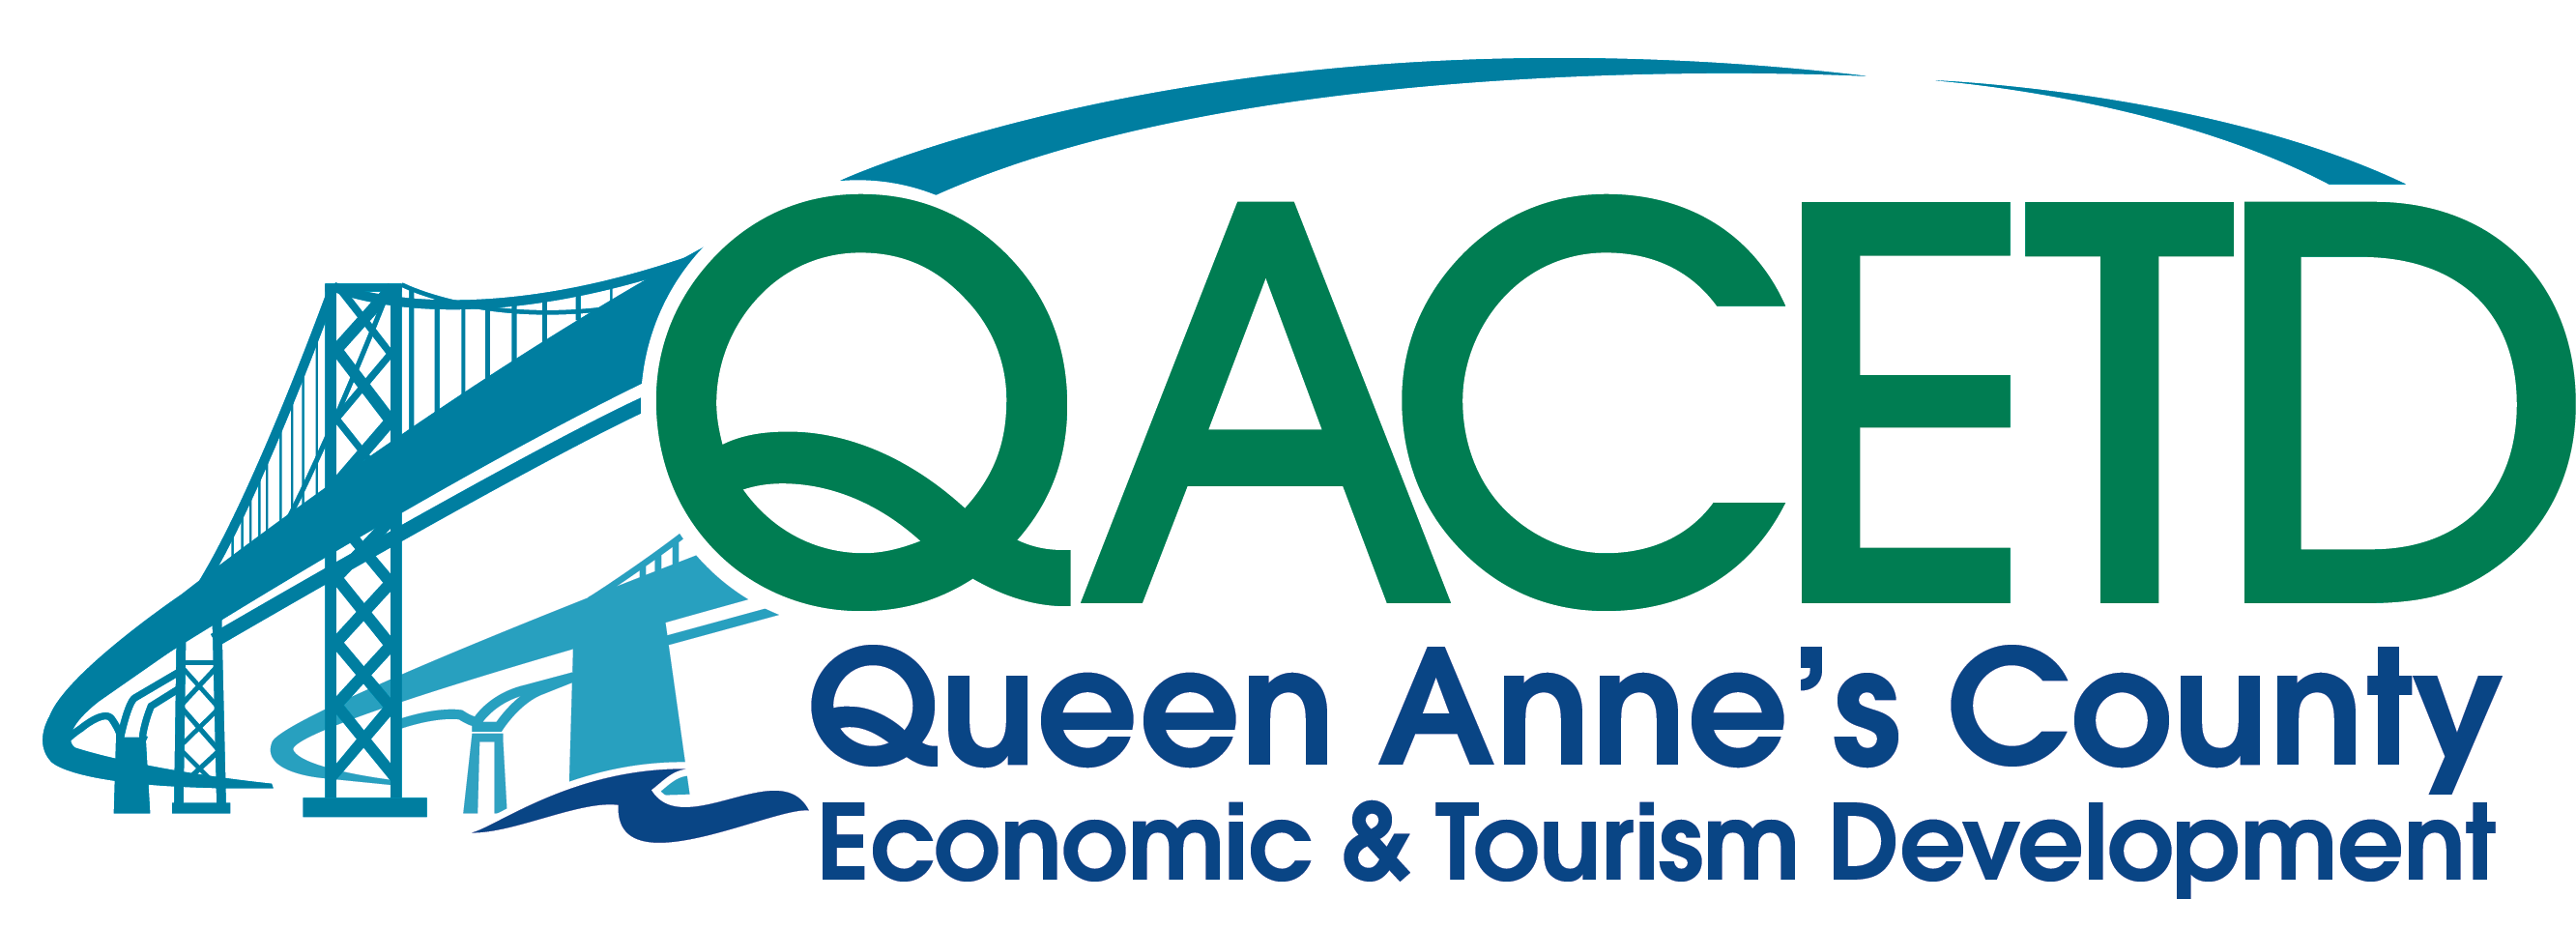 Queen Anne's County Economic & Tourism Development 